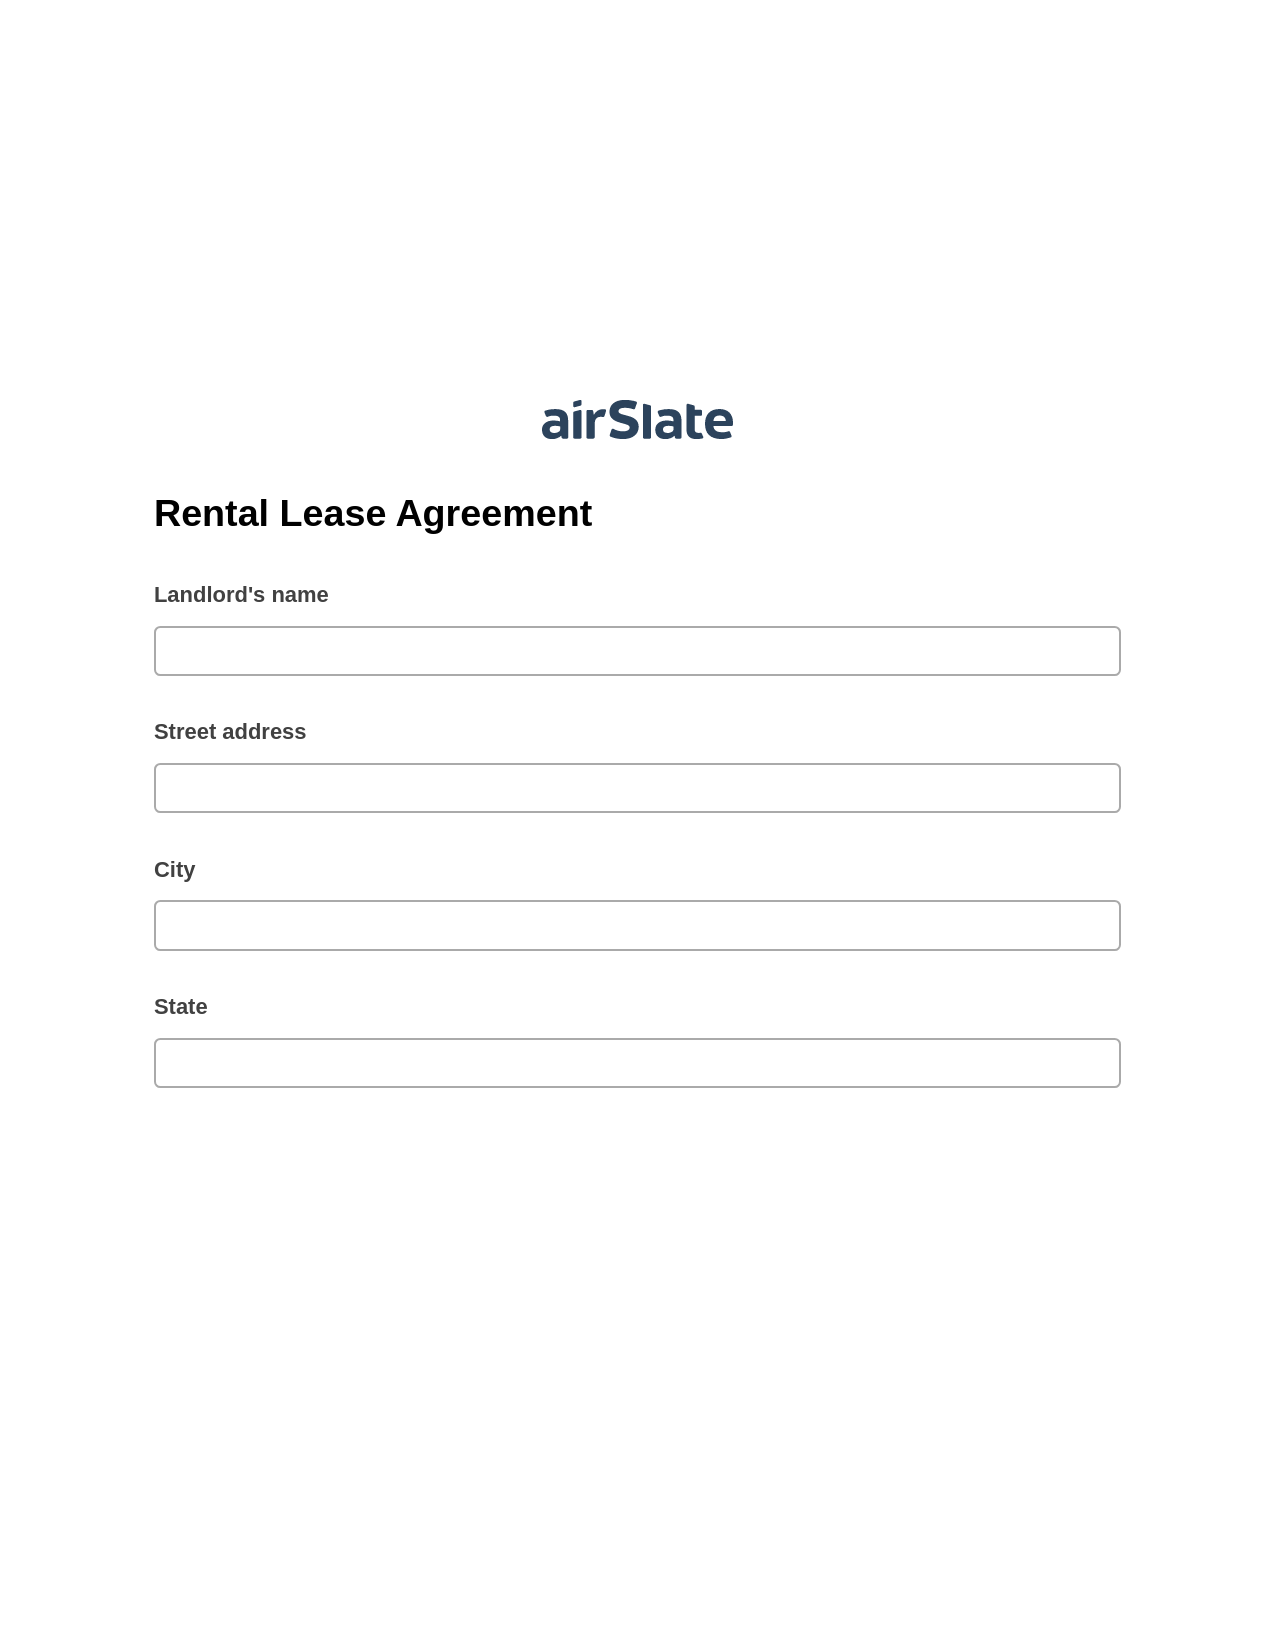 Rental Lease Agreement Pre-fill from MySQL Dropdown Options Bot, Slack Notification Bot, Post-finish Document Bot